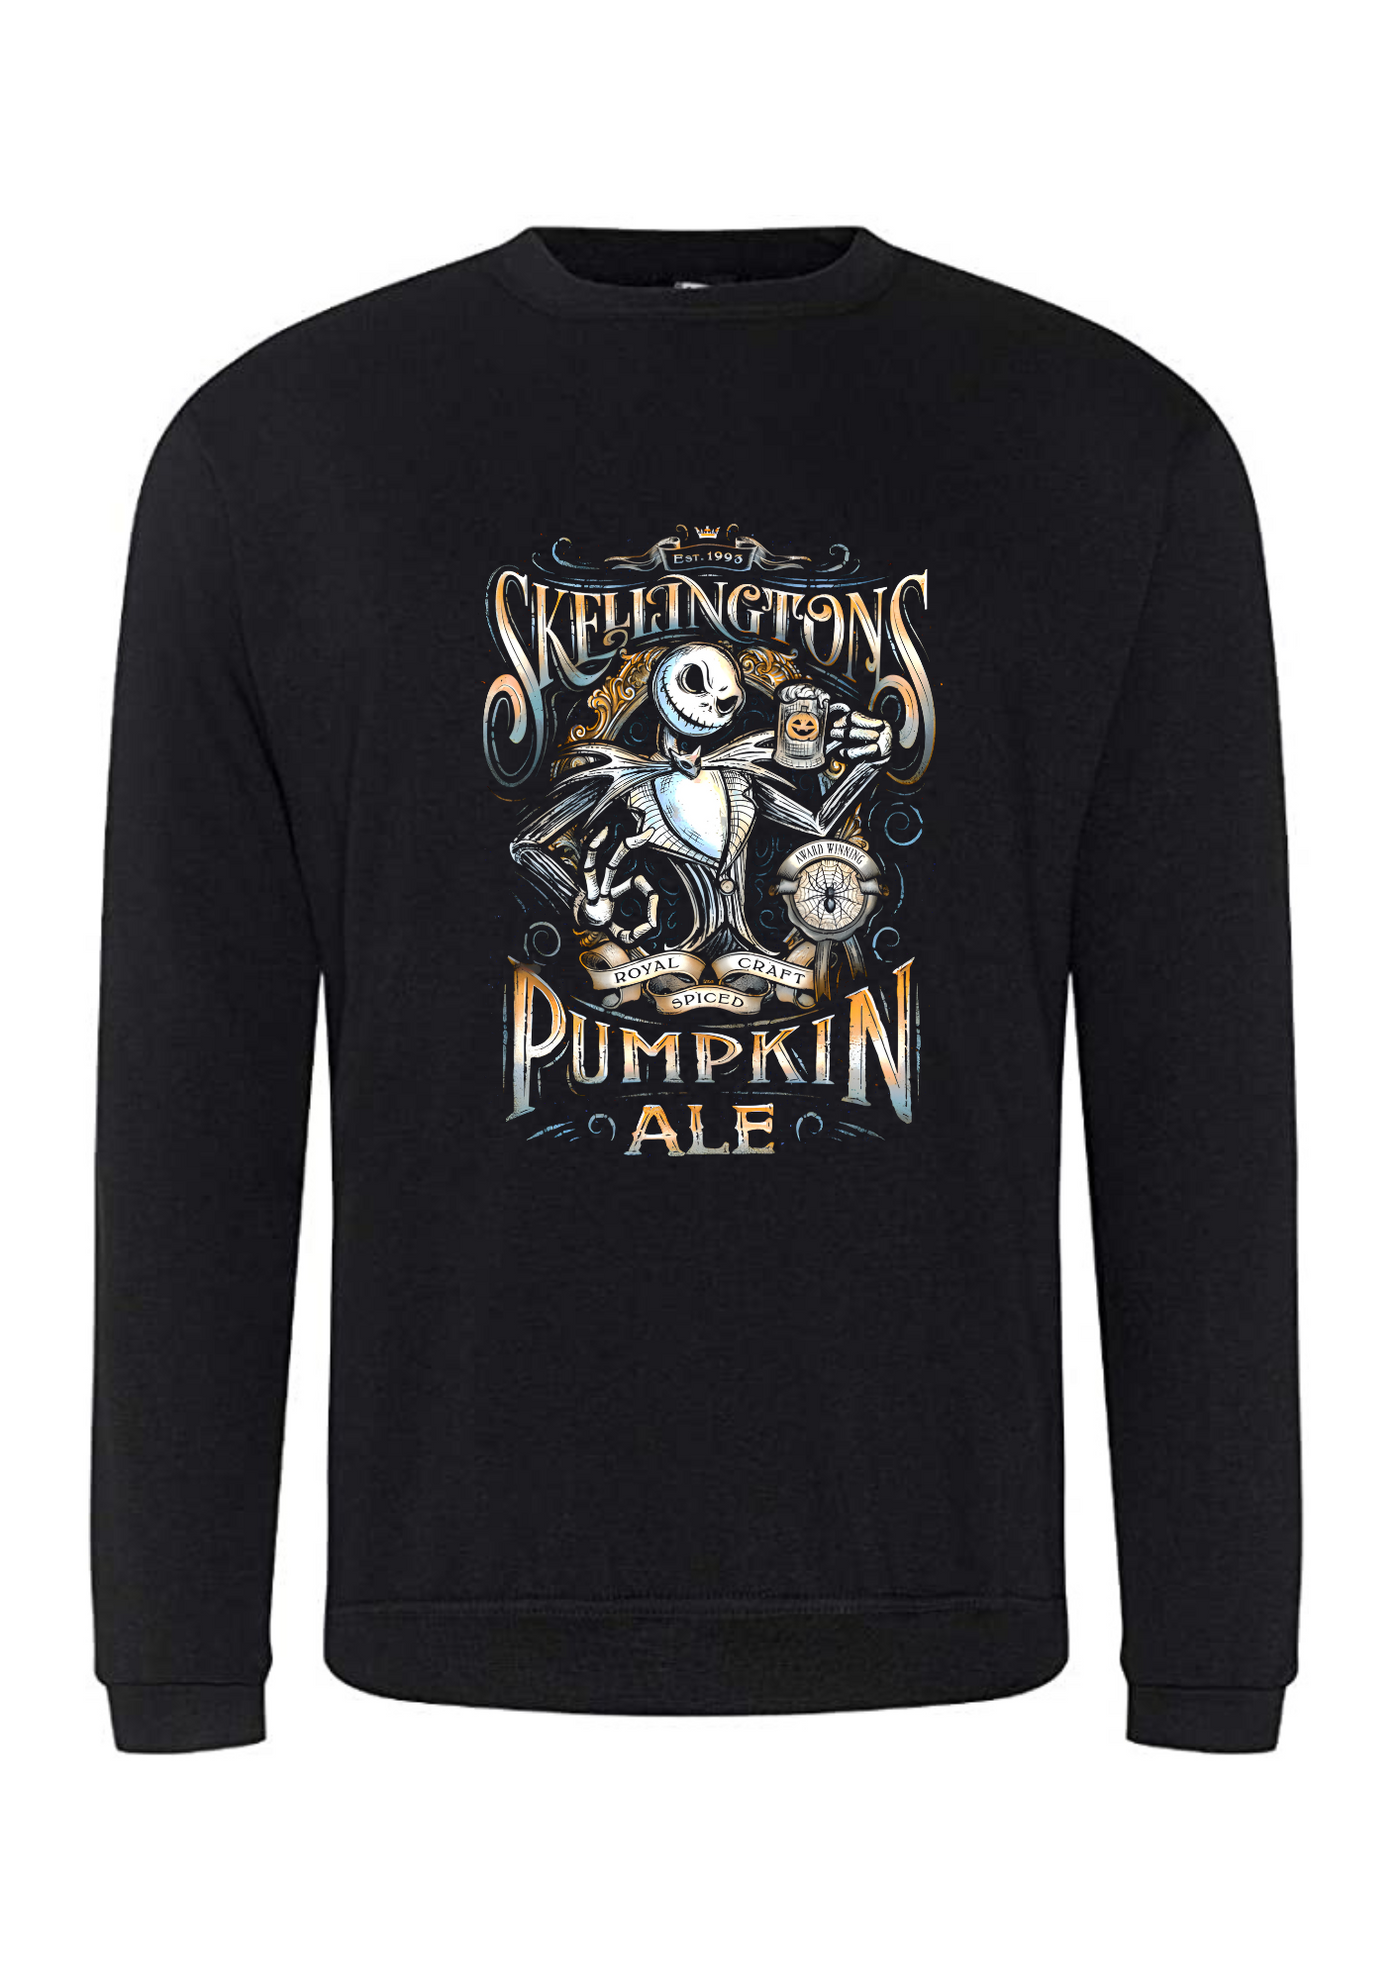 Black "Skellington Pumpkin Ale" Unisex Sweatshirt